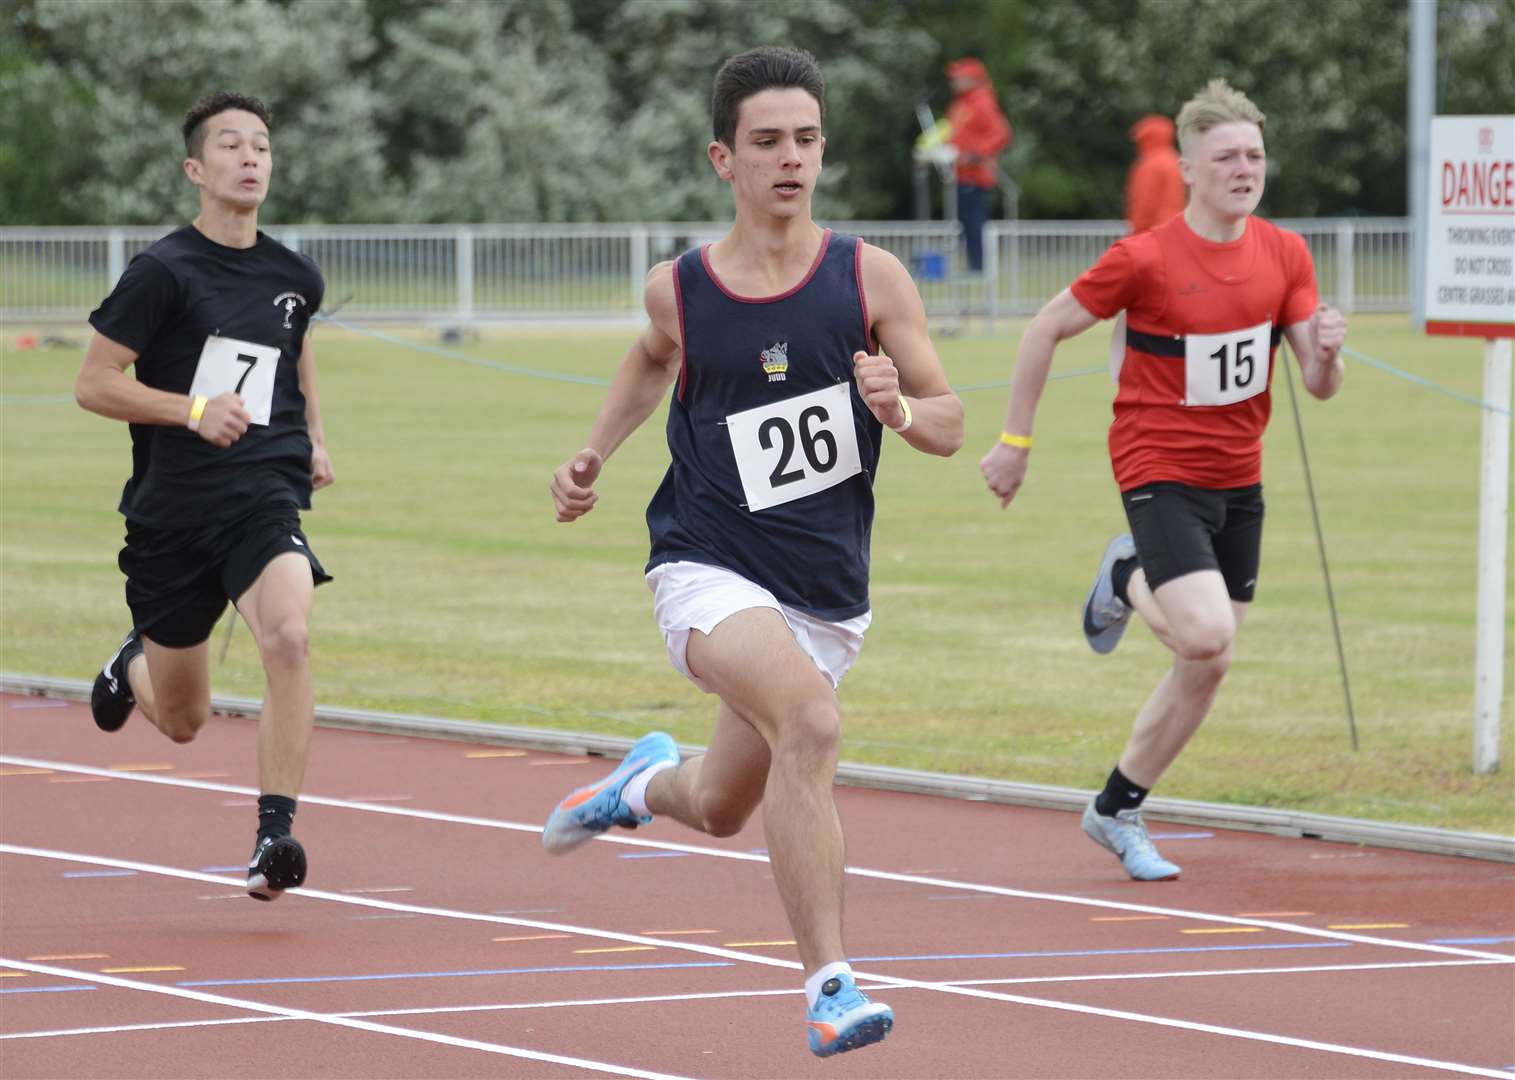 Ben Nolan of Tonbridge in the 100m Picture: Paul Amos